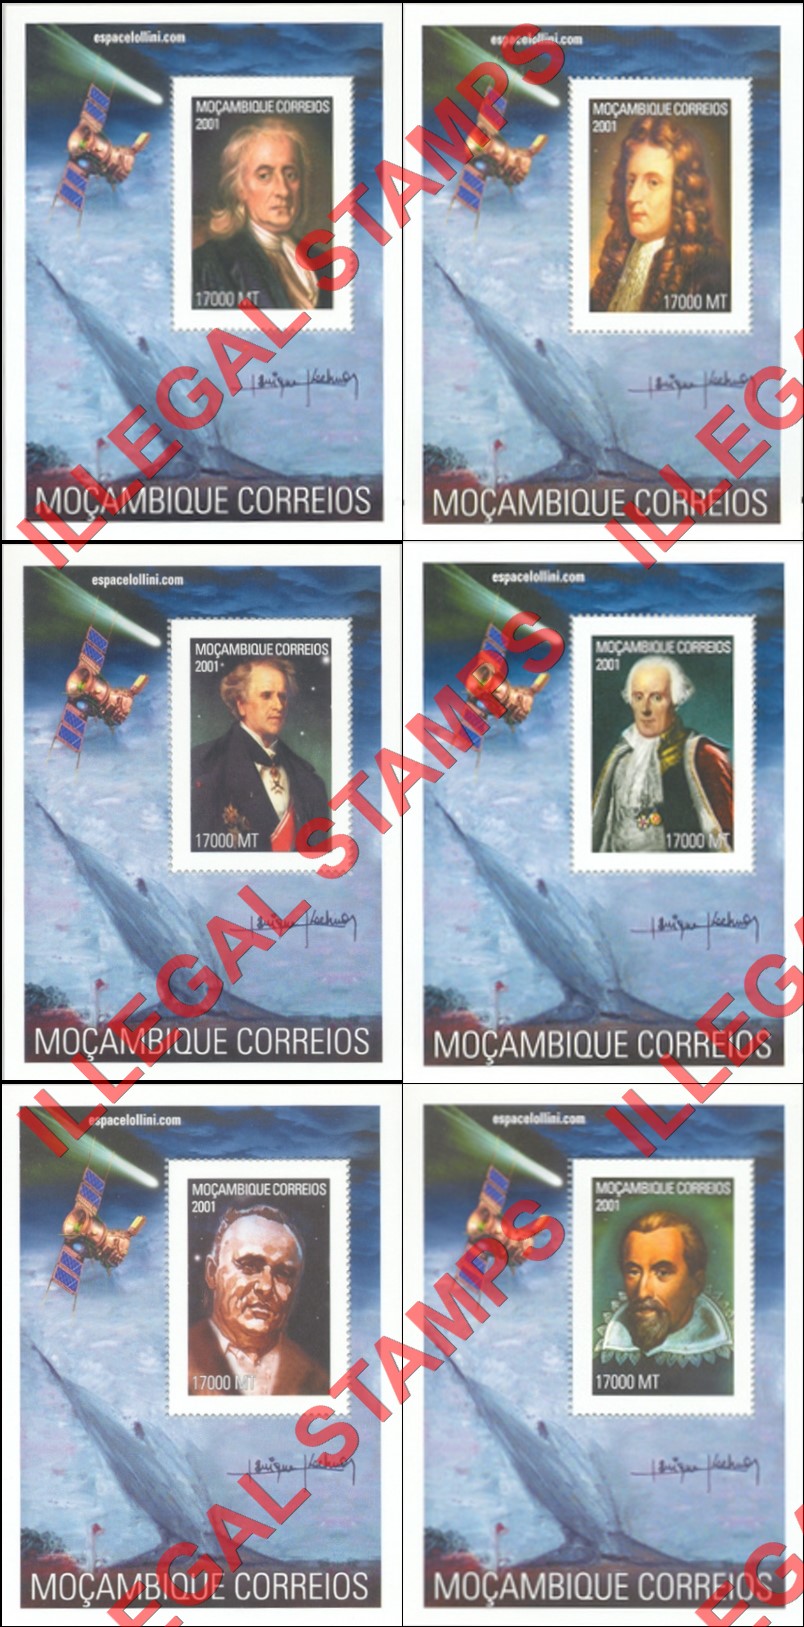  Mozambique 2001 Space Scientists Lollini Counterfeit Illegal Stamp Souvenir Sheets of 1